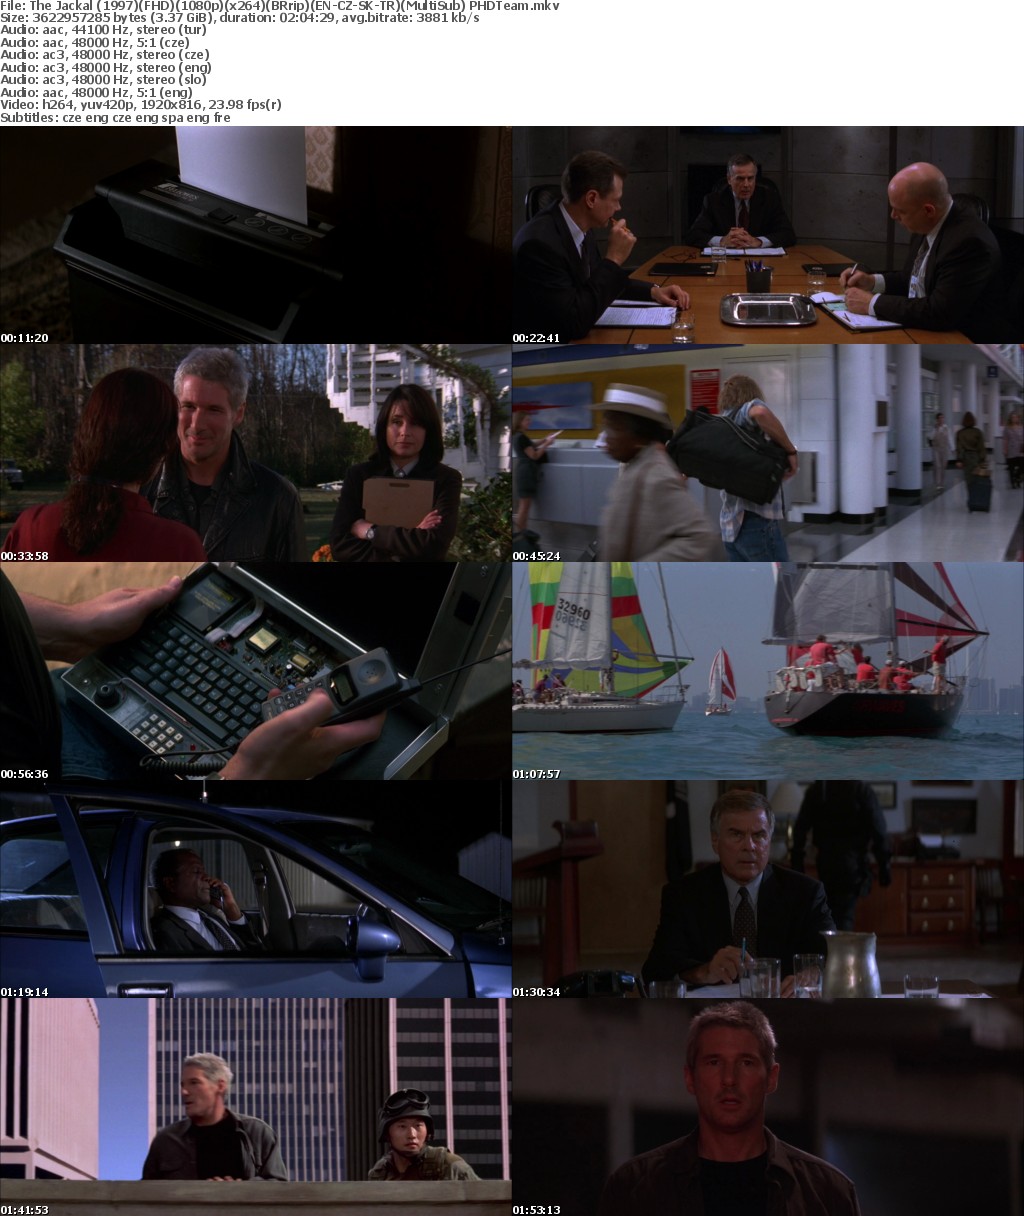 The Jackal (1997)(FHD)(1080p)(x264)(BRrip)(EN-CZ-SK-TR)(MultiSub) PHDTeam